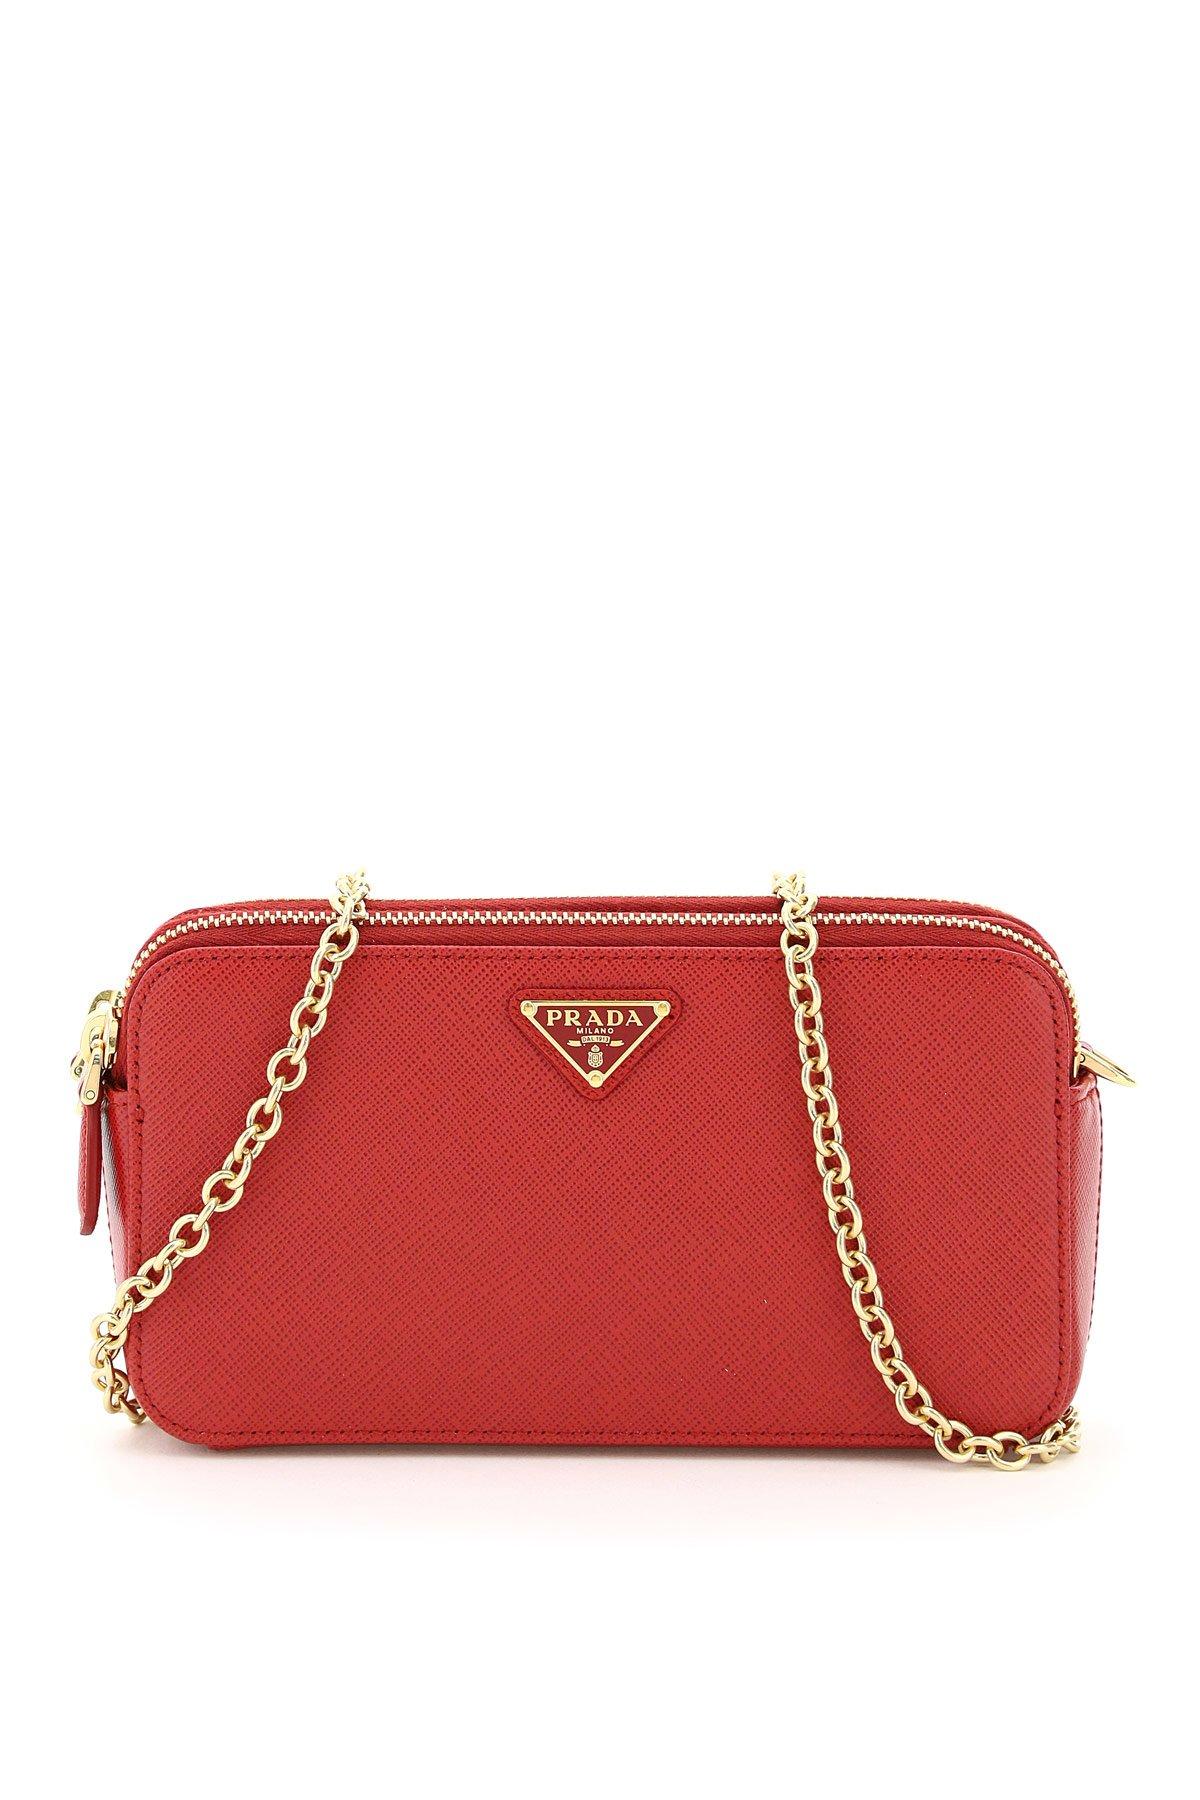 Prada Leather Double-zip Logo Shoulder Bag in Red | Lyst